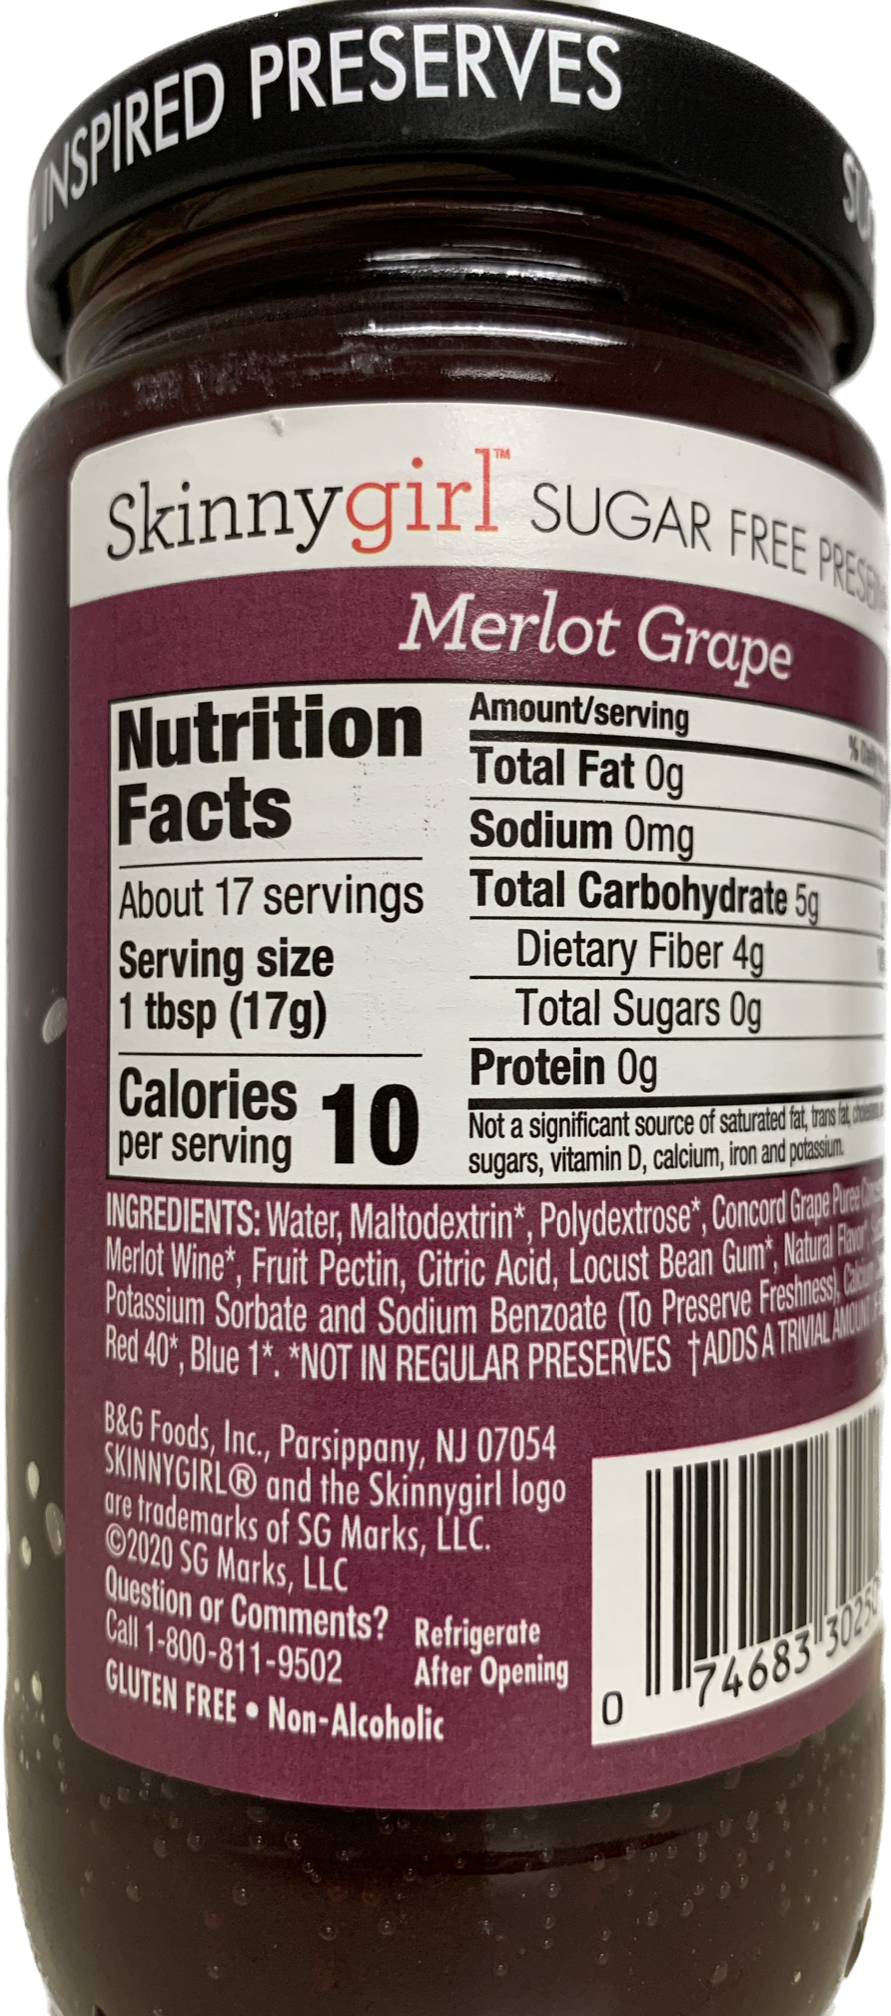 #Flavor_Merlot Grape